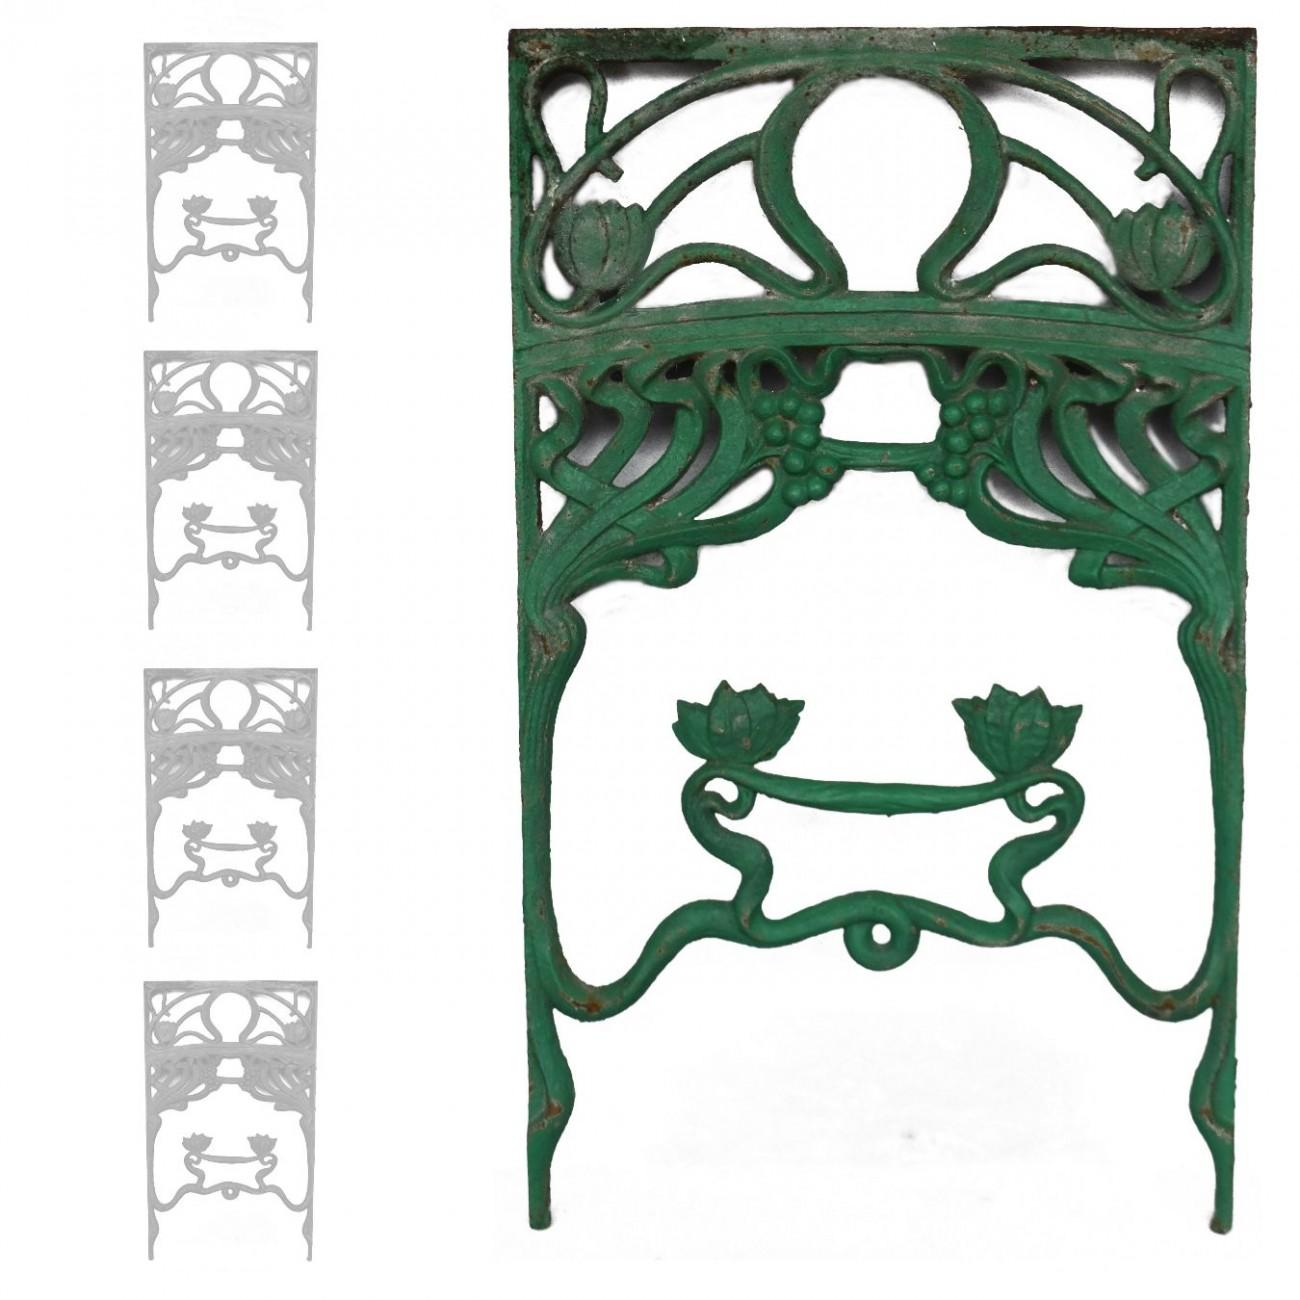 Series 4 window railing Art Nouveau cast (+2 to restore), circa 1900.